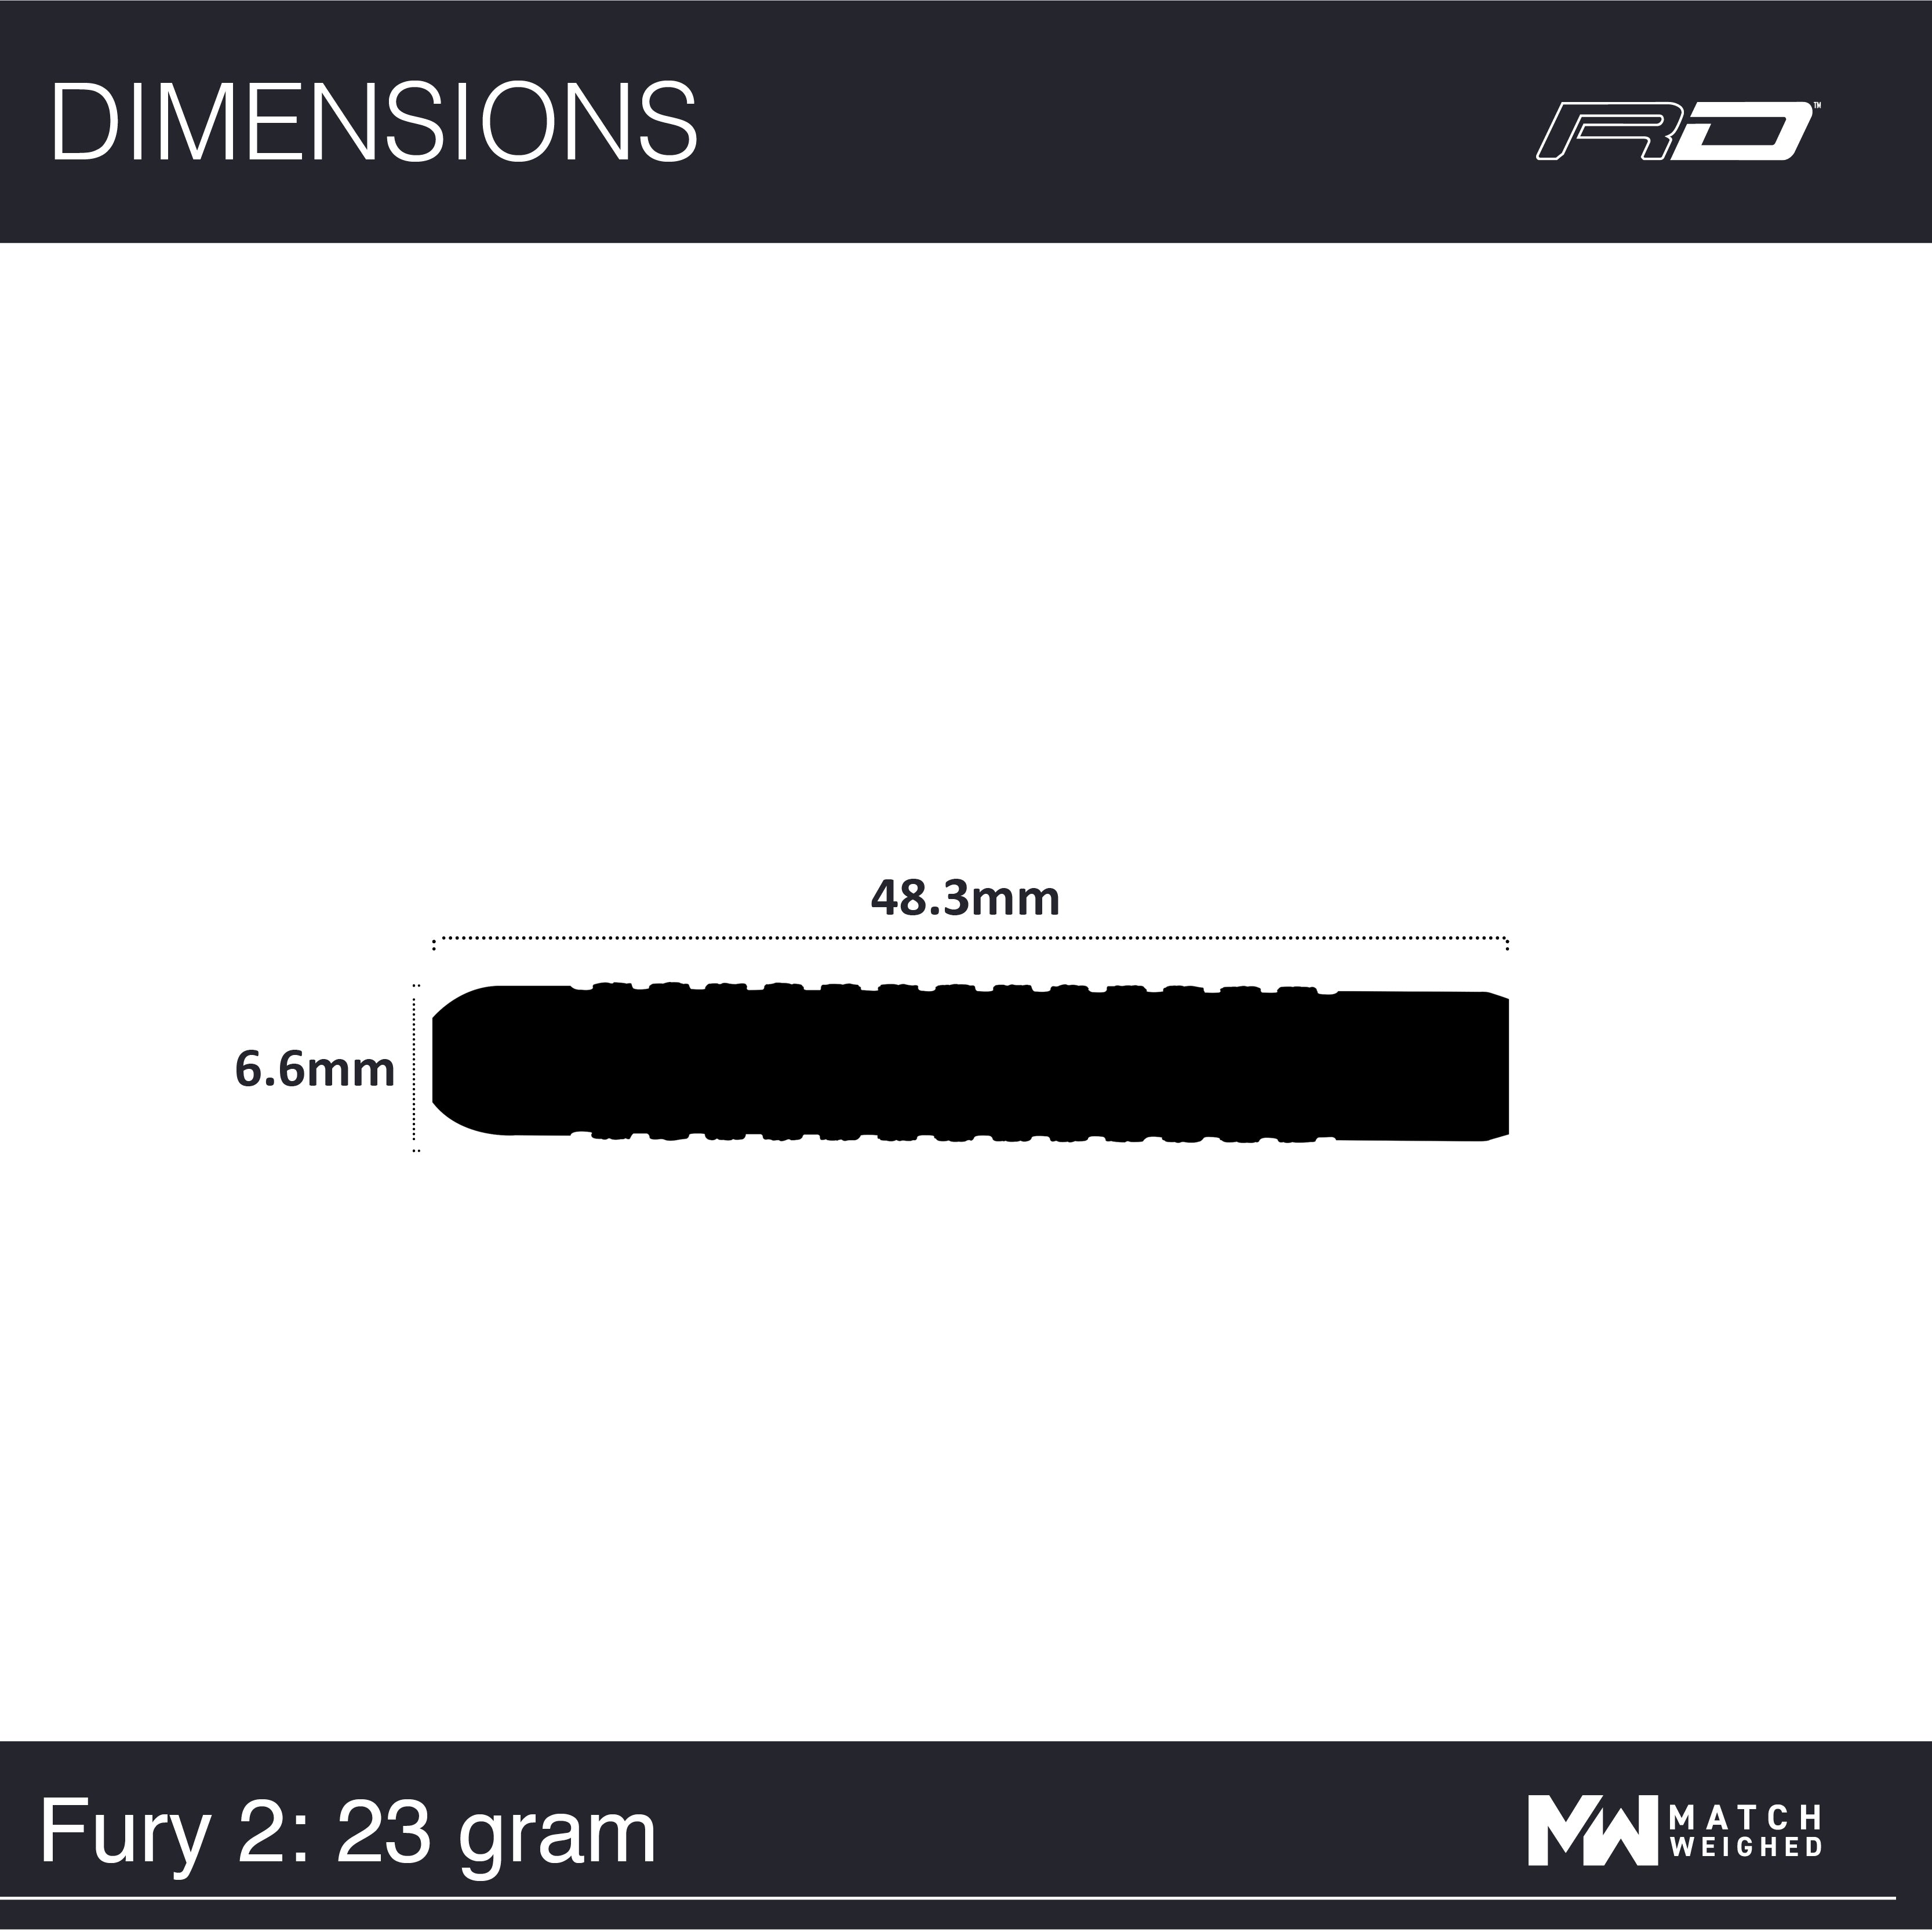 RDD0033_Fury 2 23g - Image 7.jpg